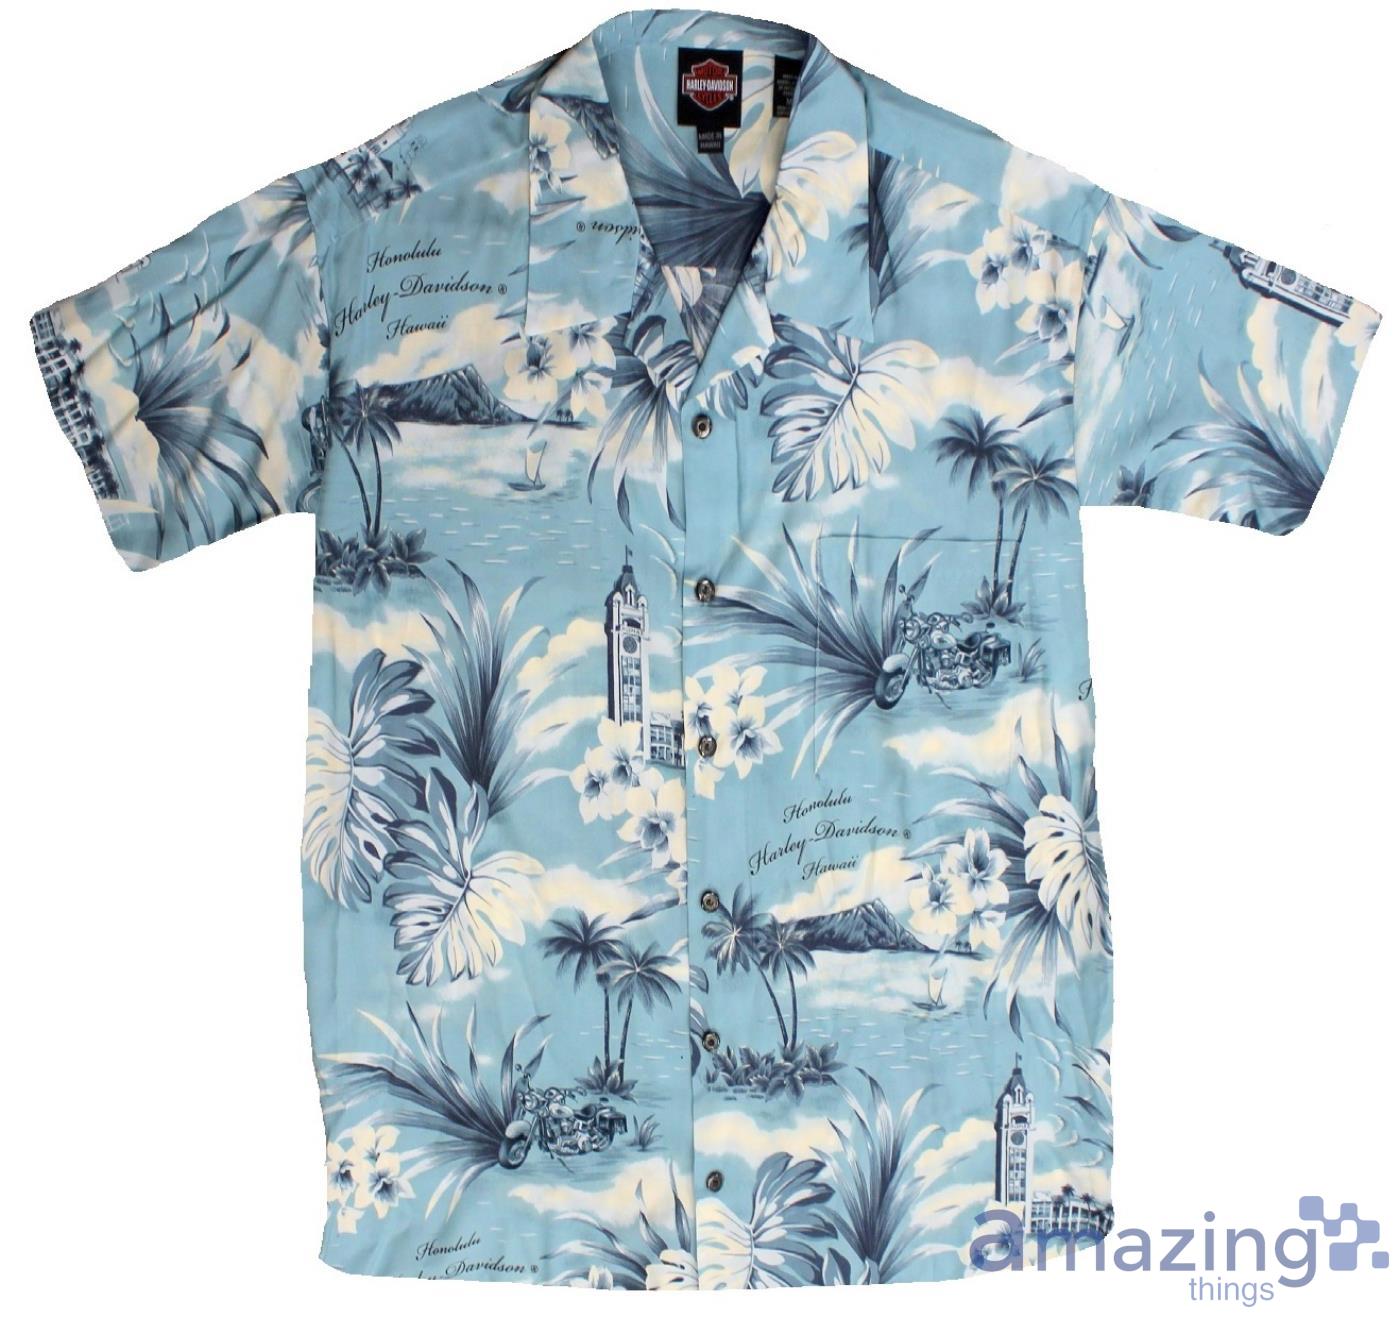 Harley-Davidson And Tropical Flowers Blue Hawaiian Shirt Product Photo 1